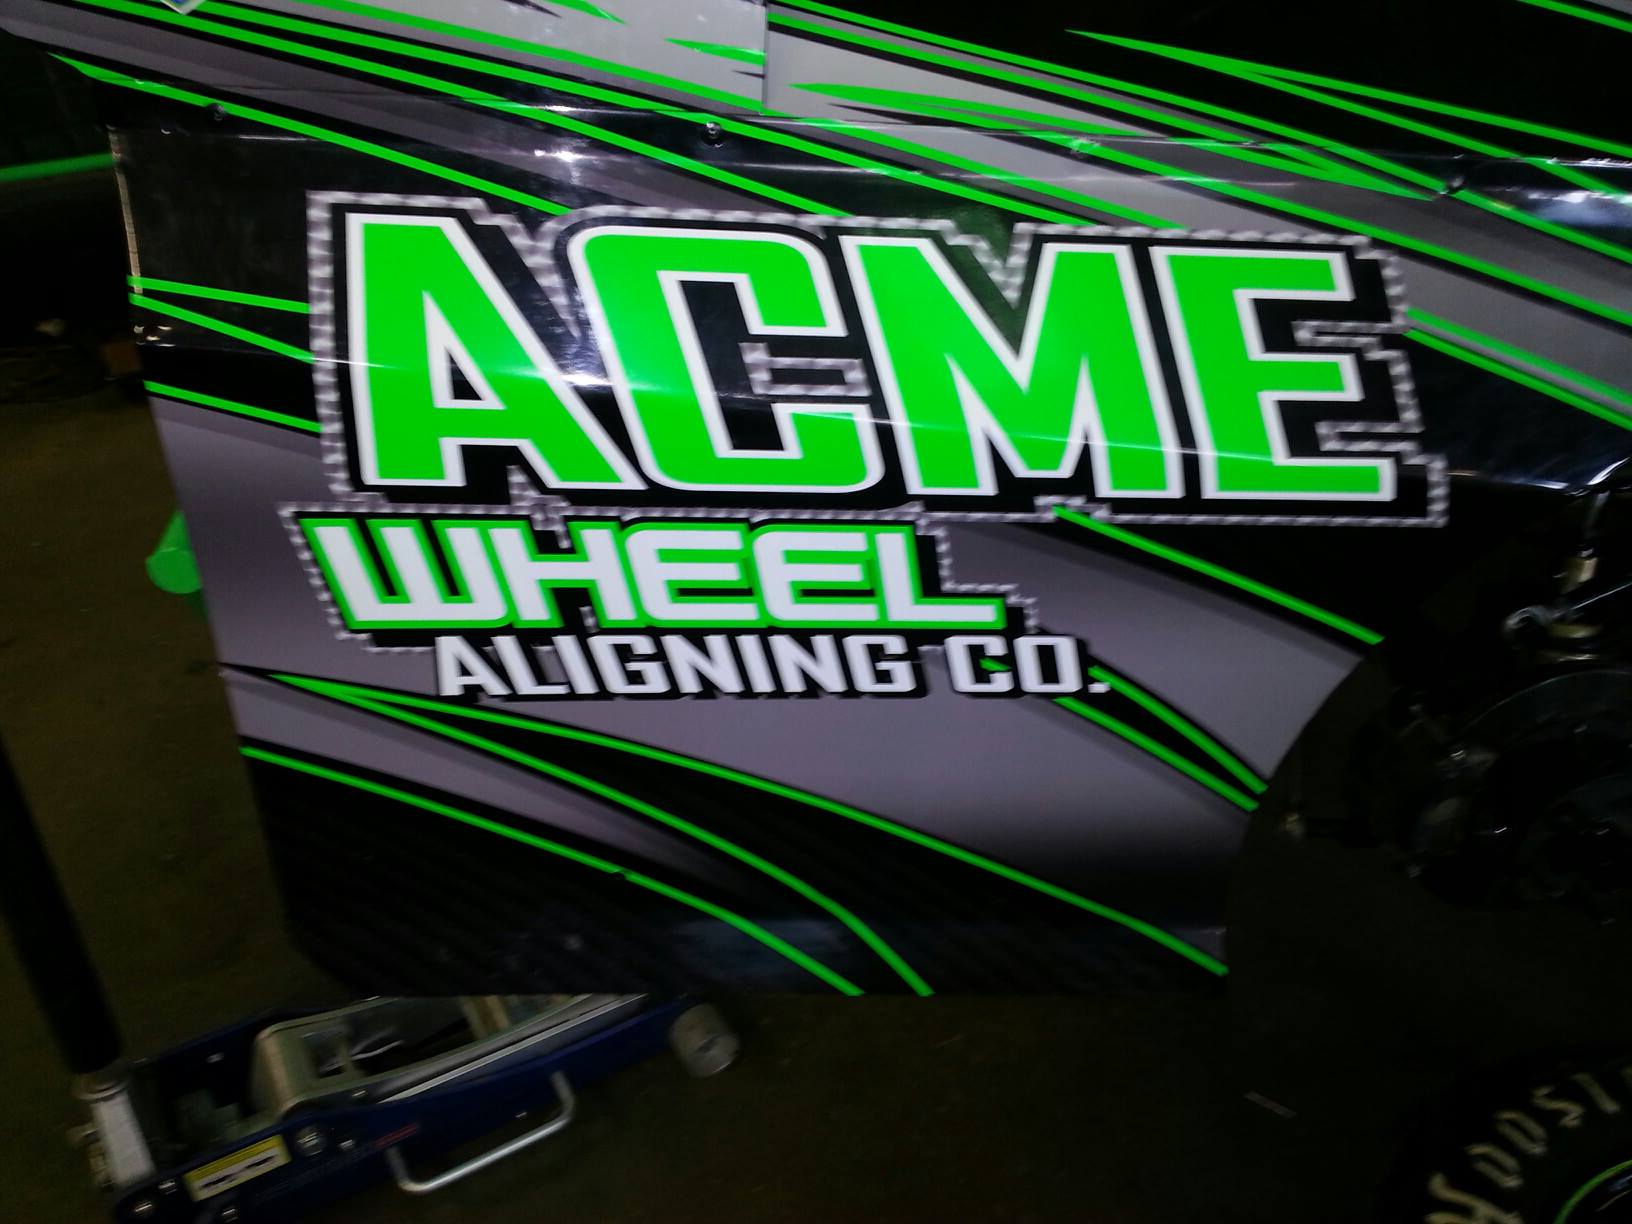 Acme Wheel Aligning Co